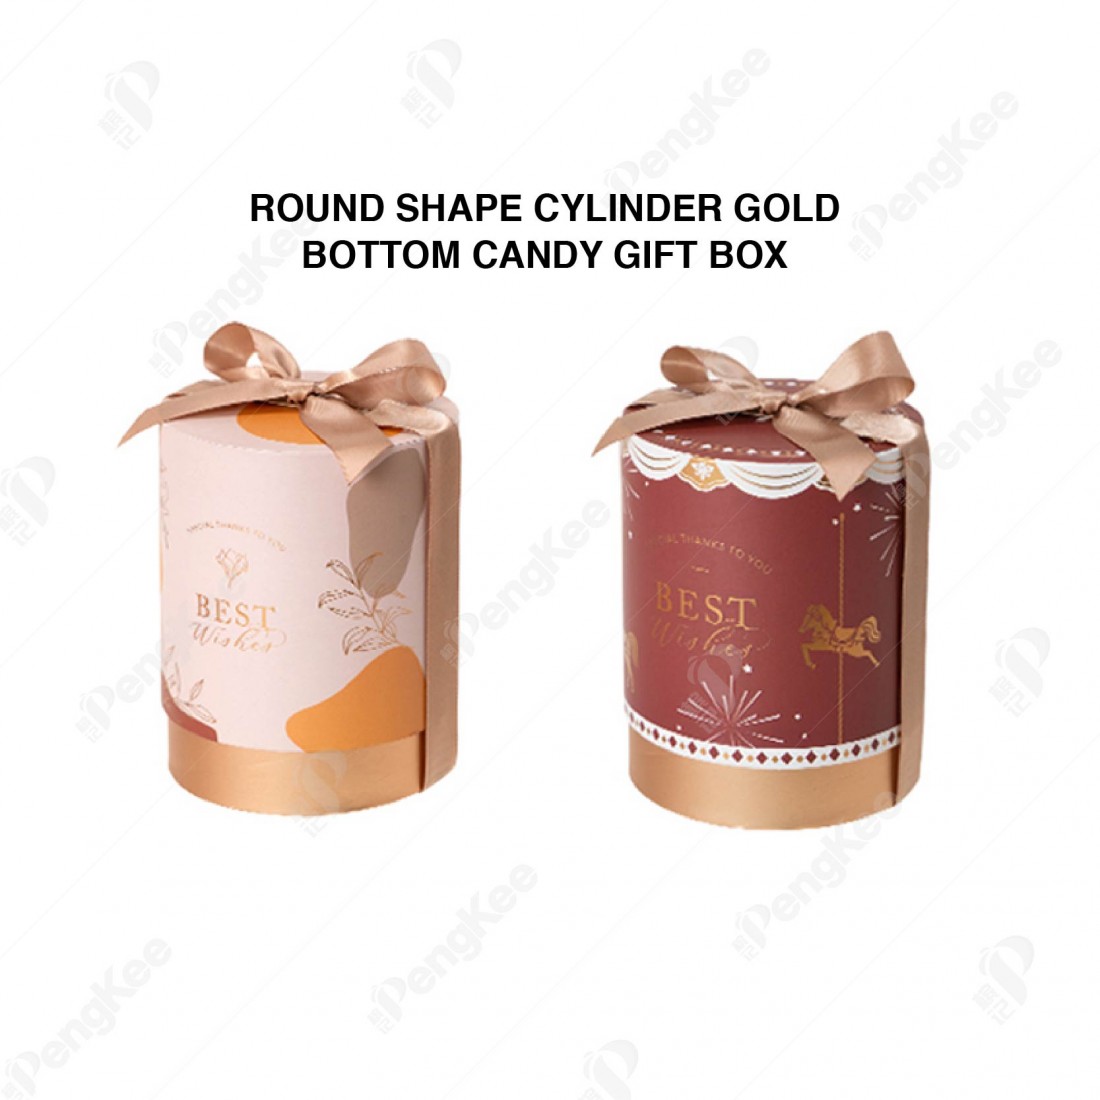 ROUND SHAPE CYLINDER GOLD BOTTOM CANDY GIFT BOX